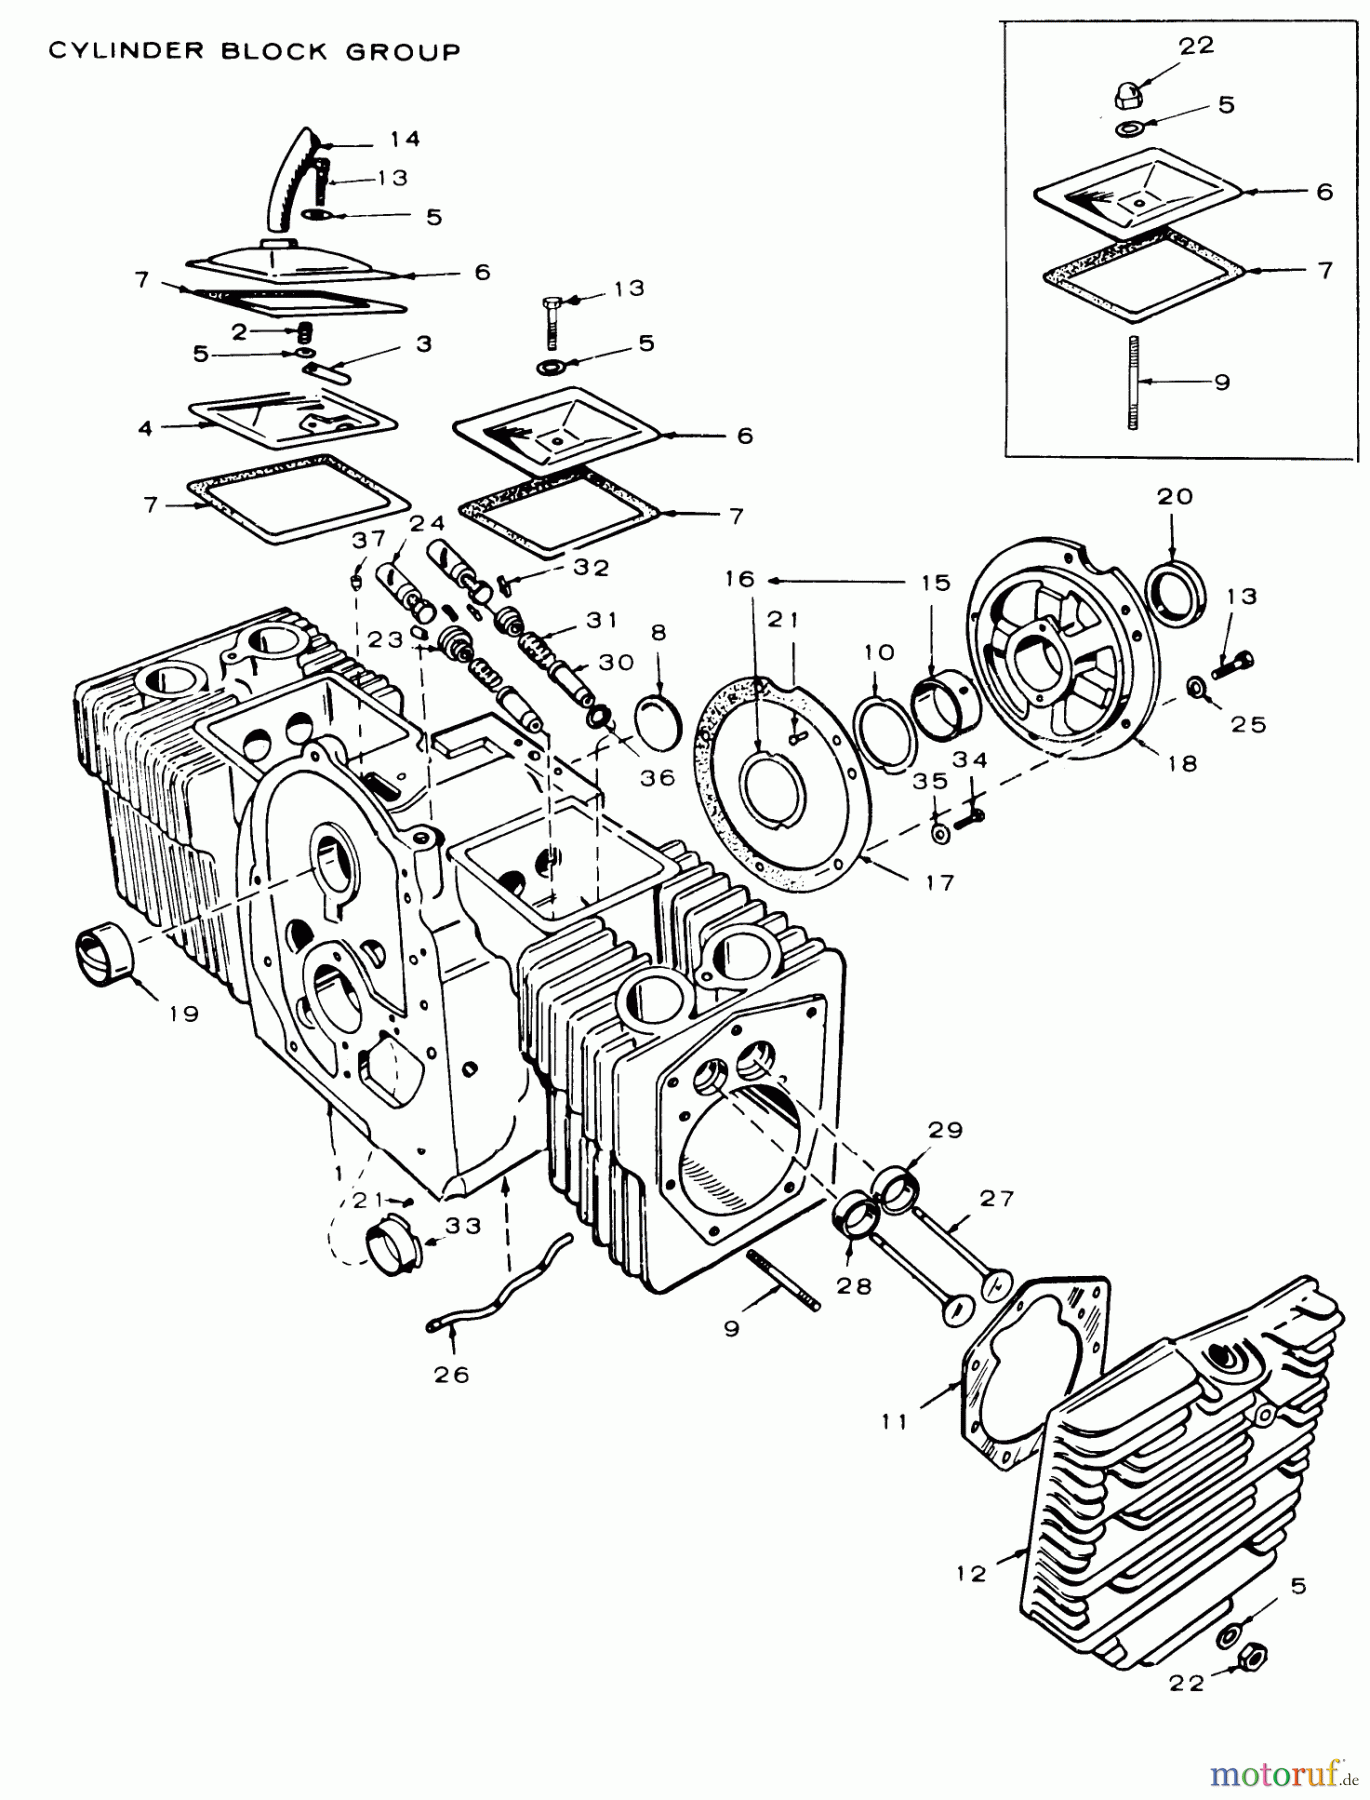  Toro Neu Mowers, Lawn & Garden Tractor Seite 1 61-20KS02 (D-200) - Toro D-200 Automatic Tractor, 1976 ONAN 16 HP ENGINE (MODEL #BF-MS/2929 E)(CYLINDER BLOCK GROUP)